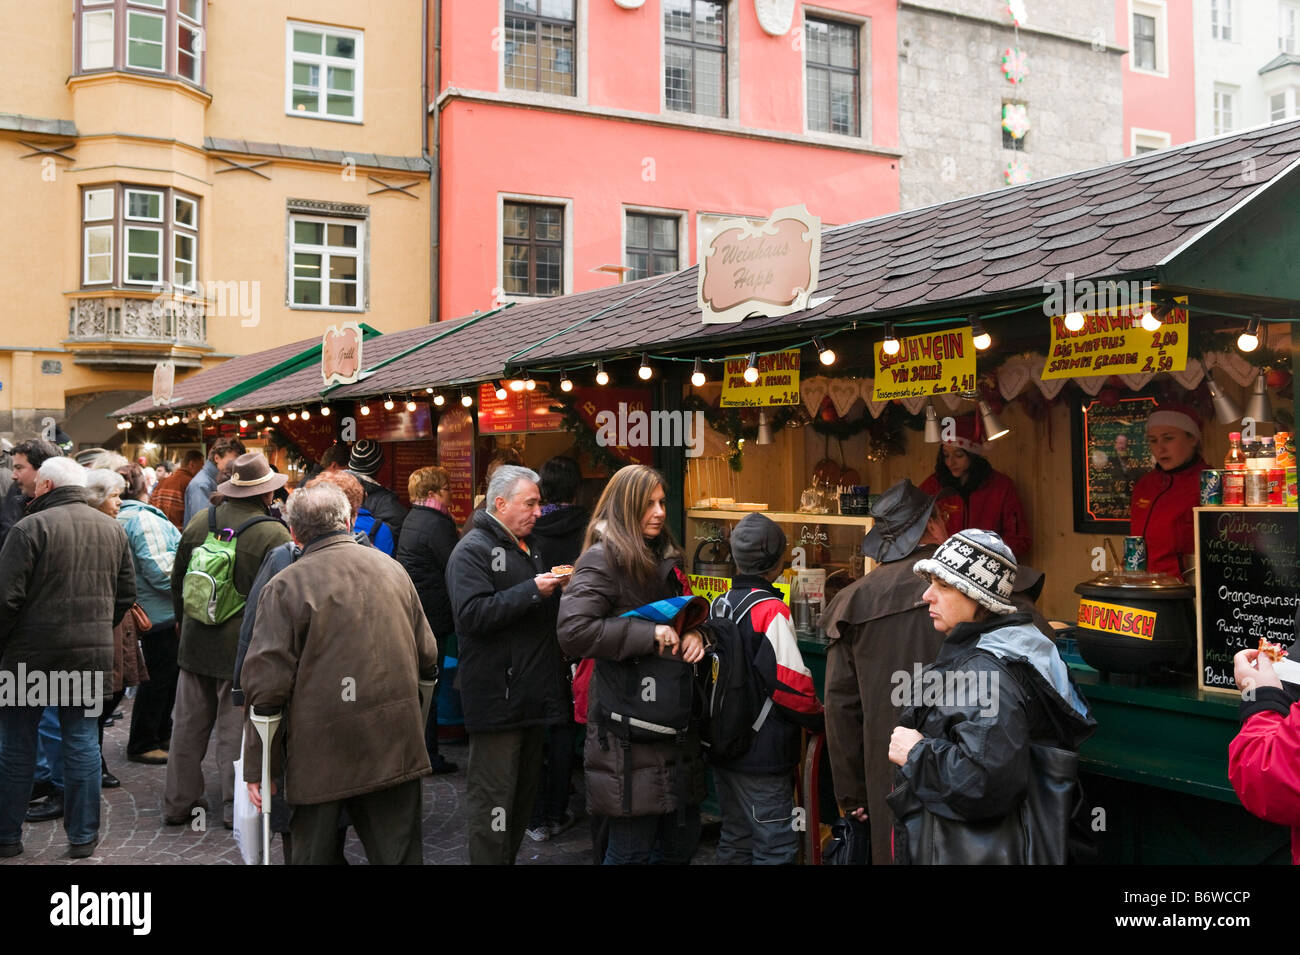 Gluhwein stand en el mercado de Navidad en la ciudad vieja (Altstadt), Innsbruck, Tirol, Austria Foto de stock